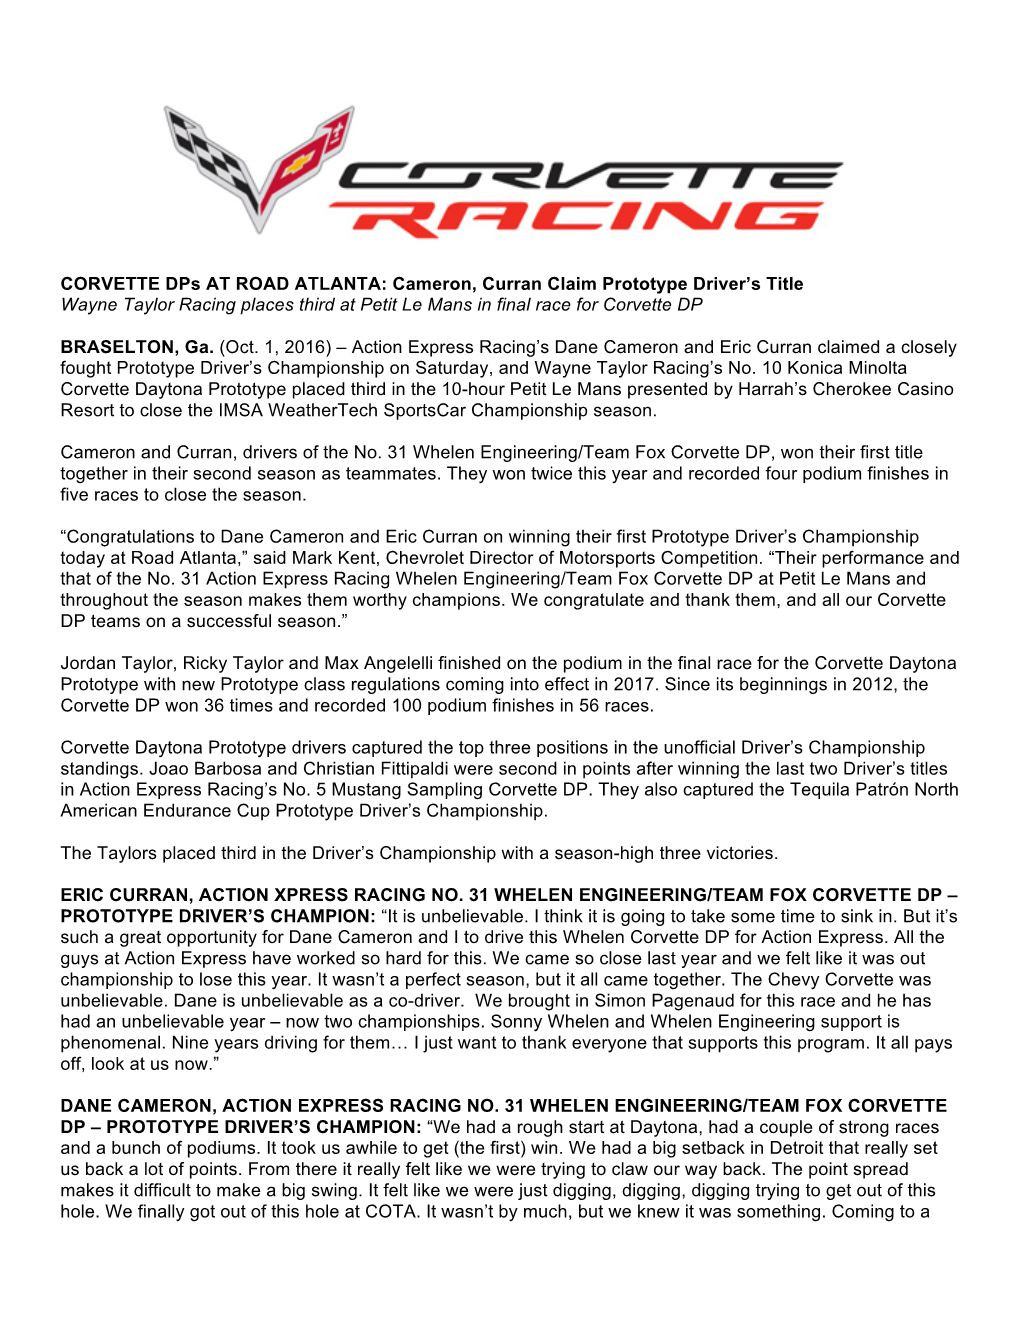 Corvette DP PLM Race Report